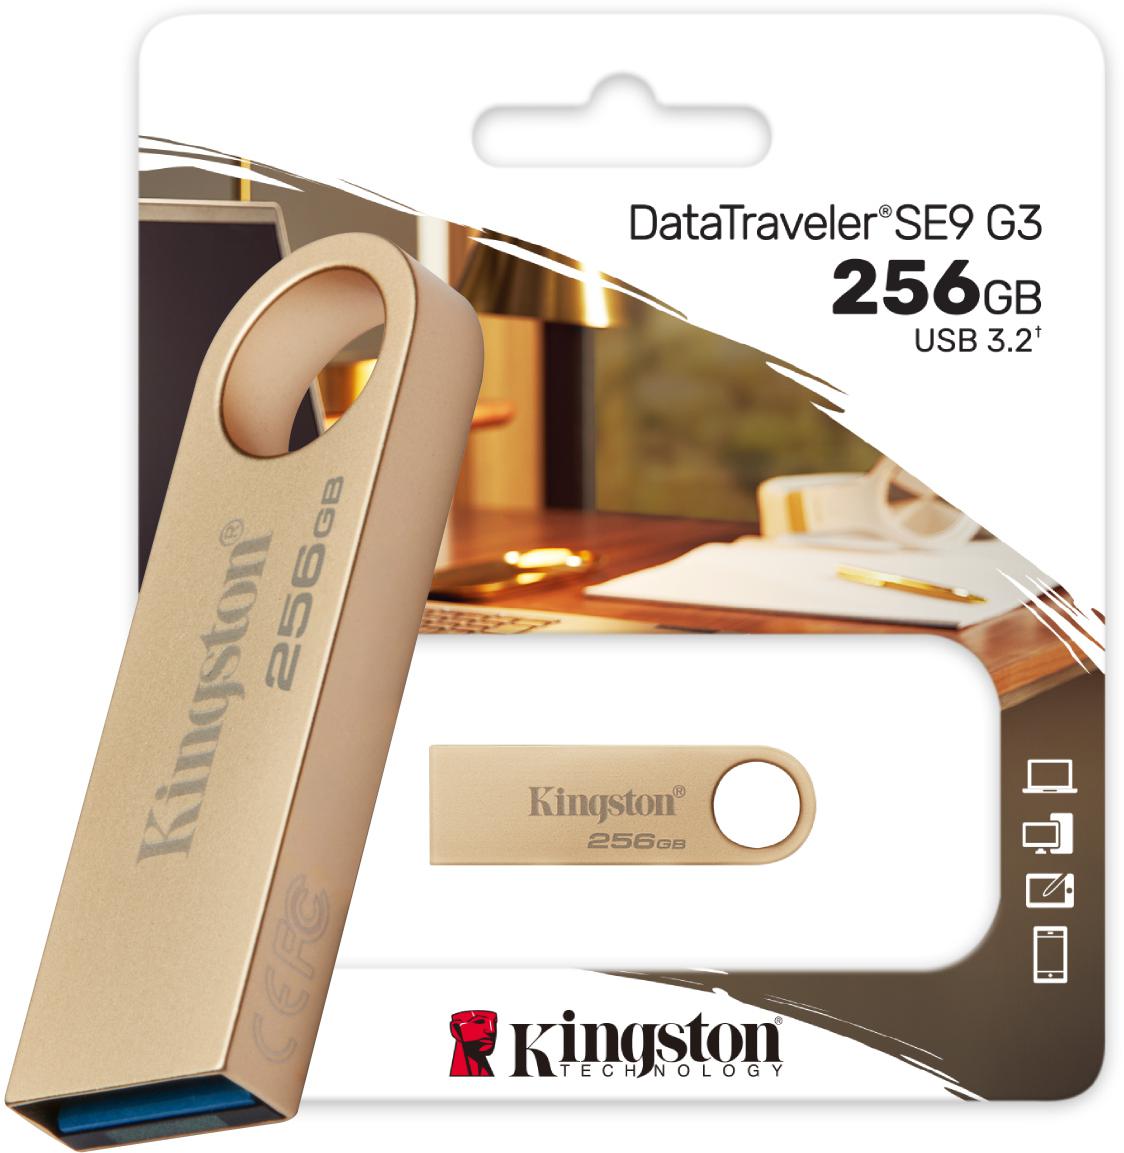 Pamięć flash USB Data Traveler SE9 G3 pendrive Kingston 256GB - najważniejsze cechy: